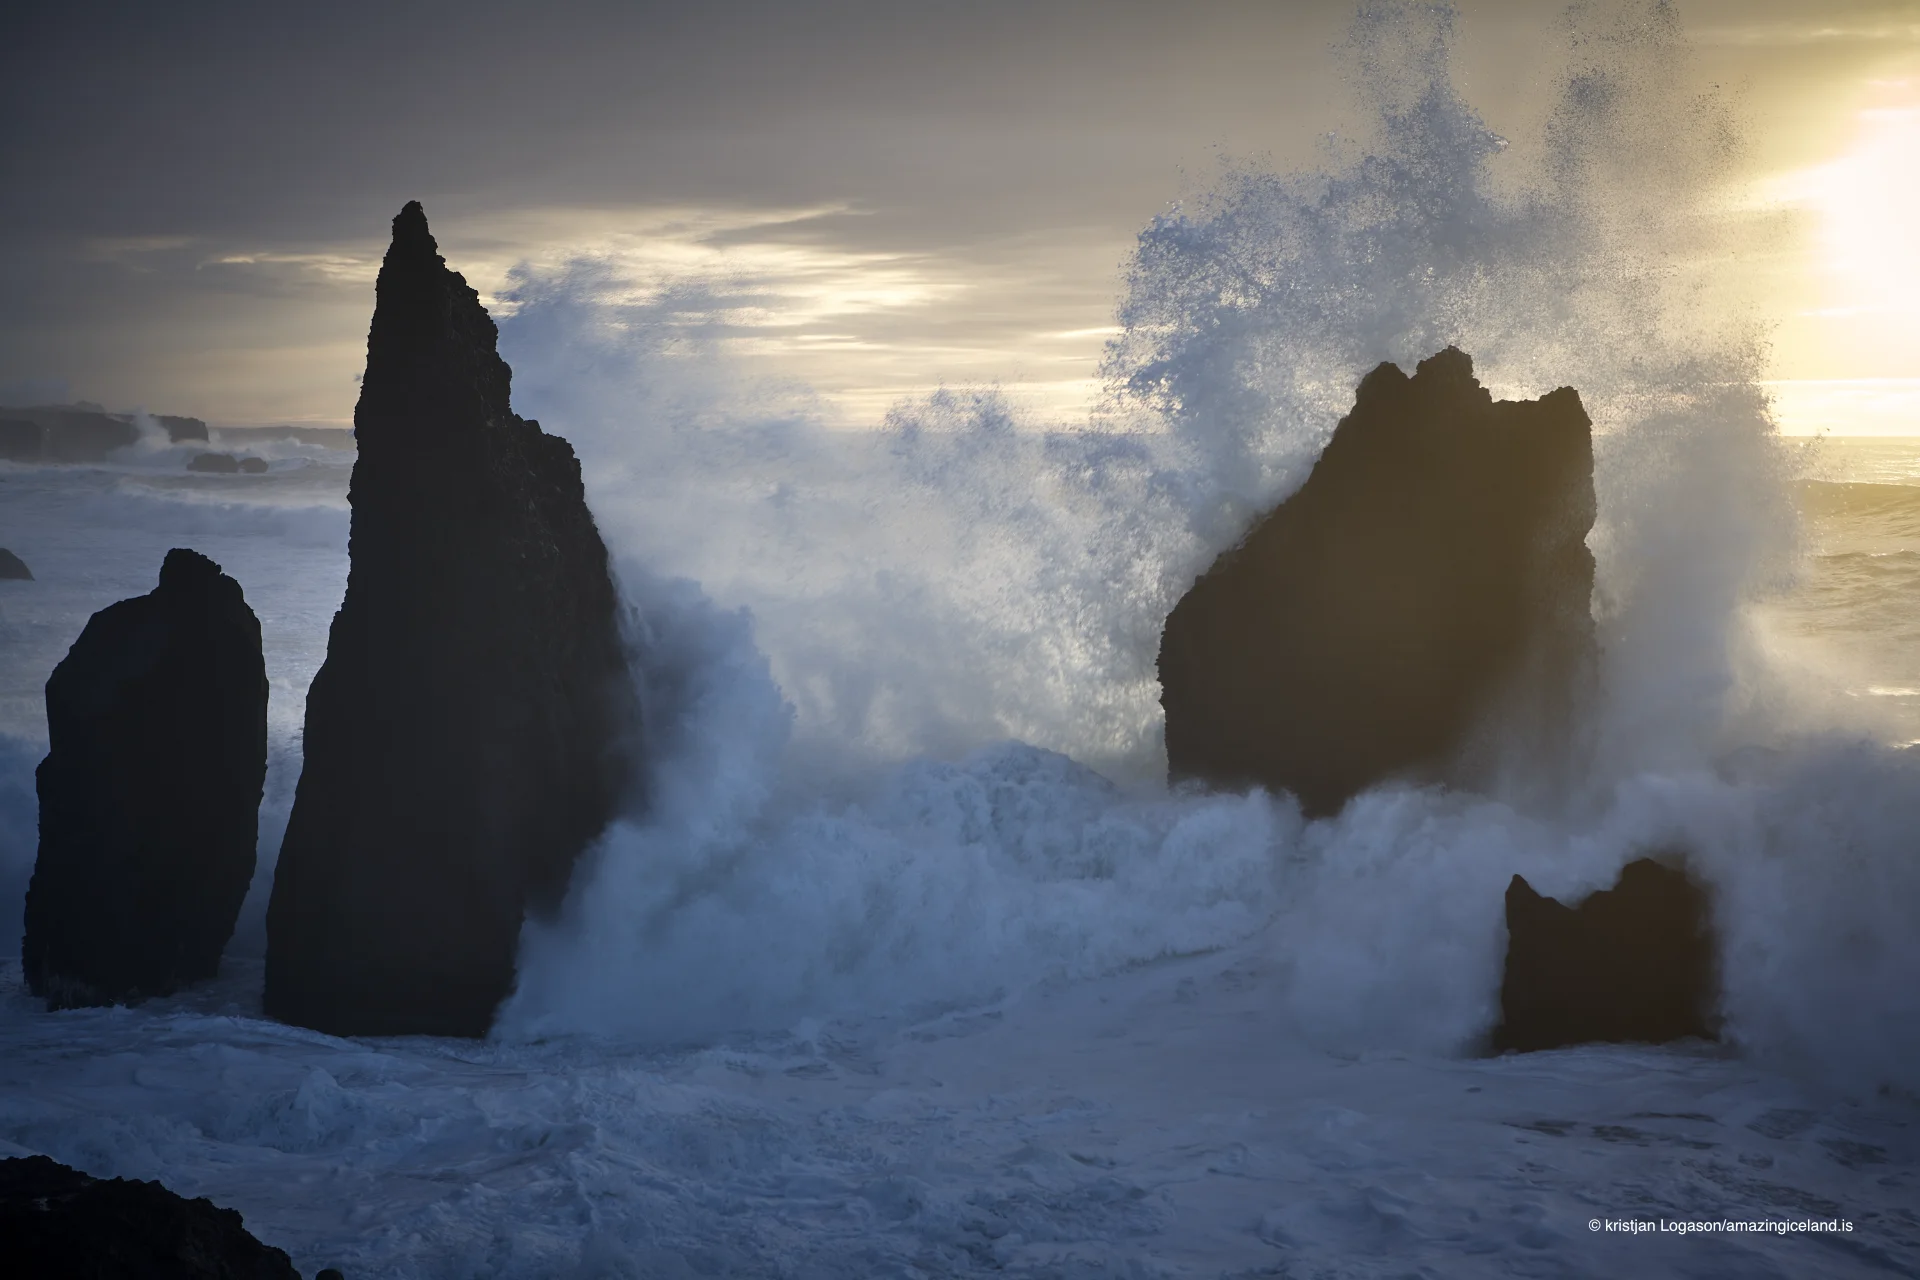 Splashing waves on boulders by Valahnukur